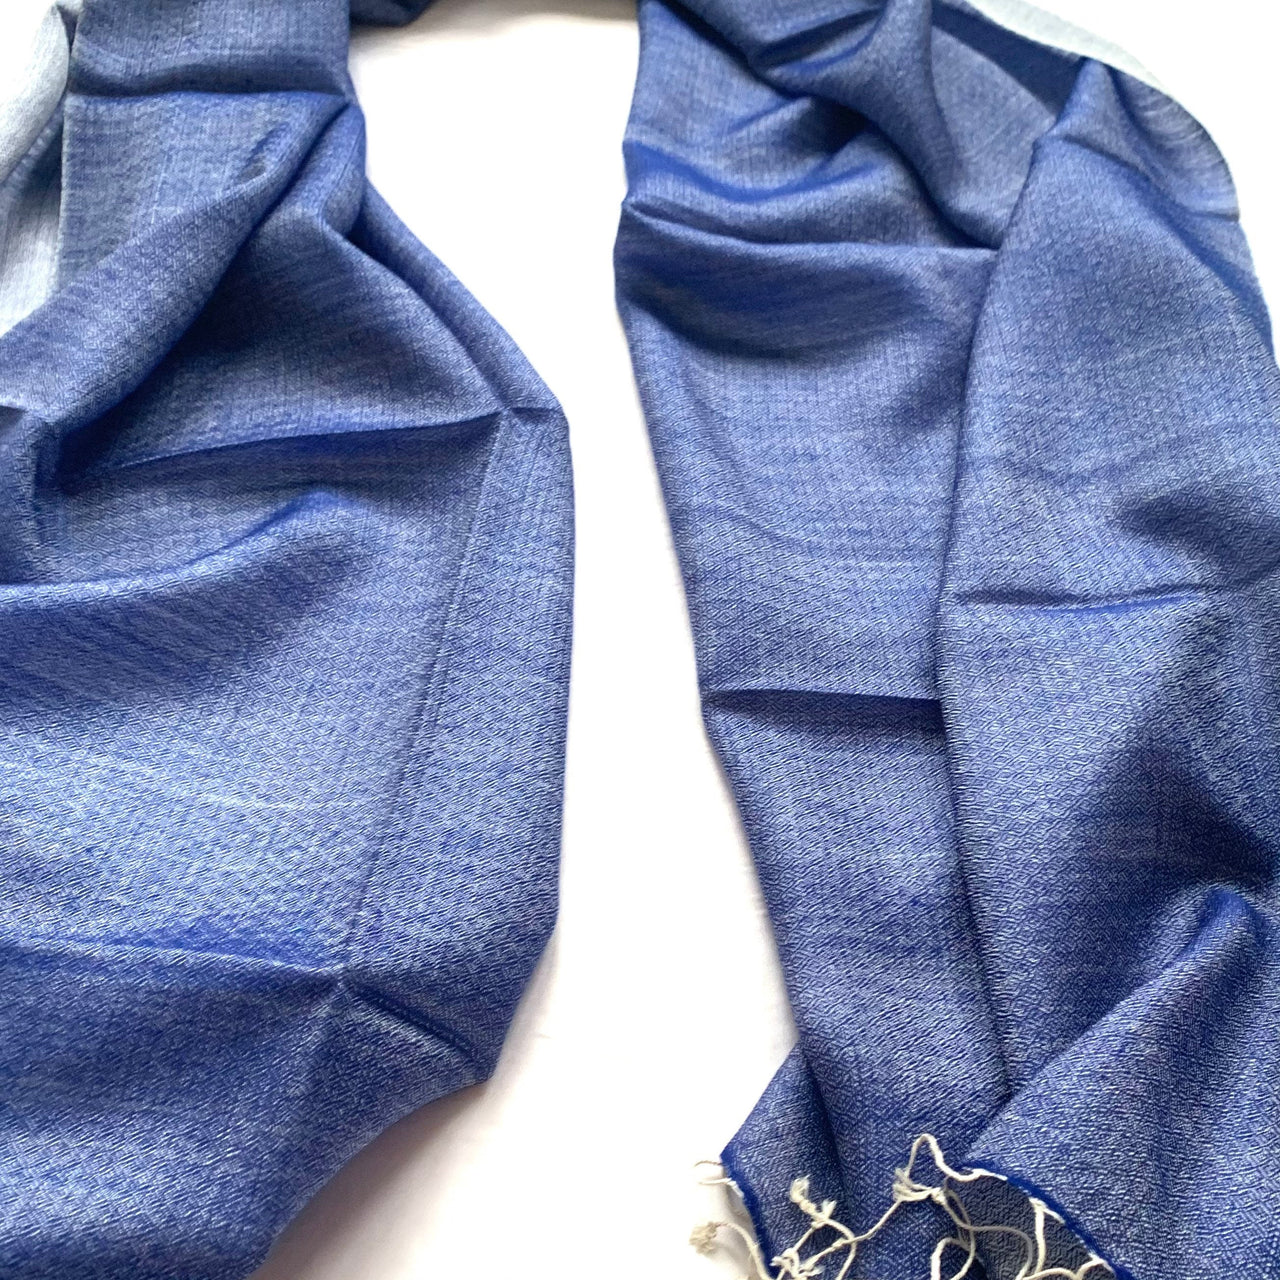 Reversible Blue Shawl Cream Silk Wool Scarf Wrap Stole